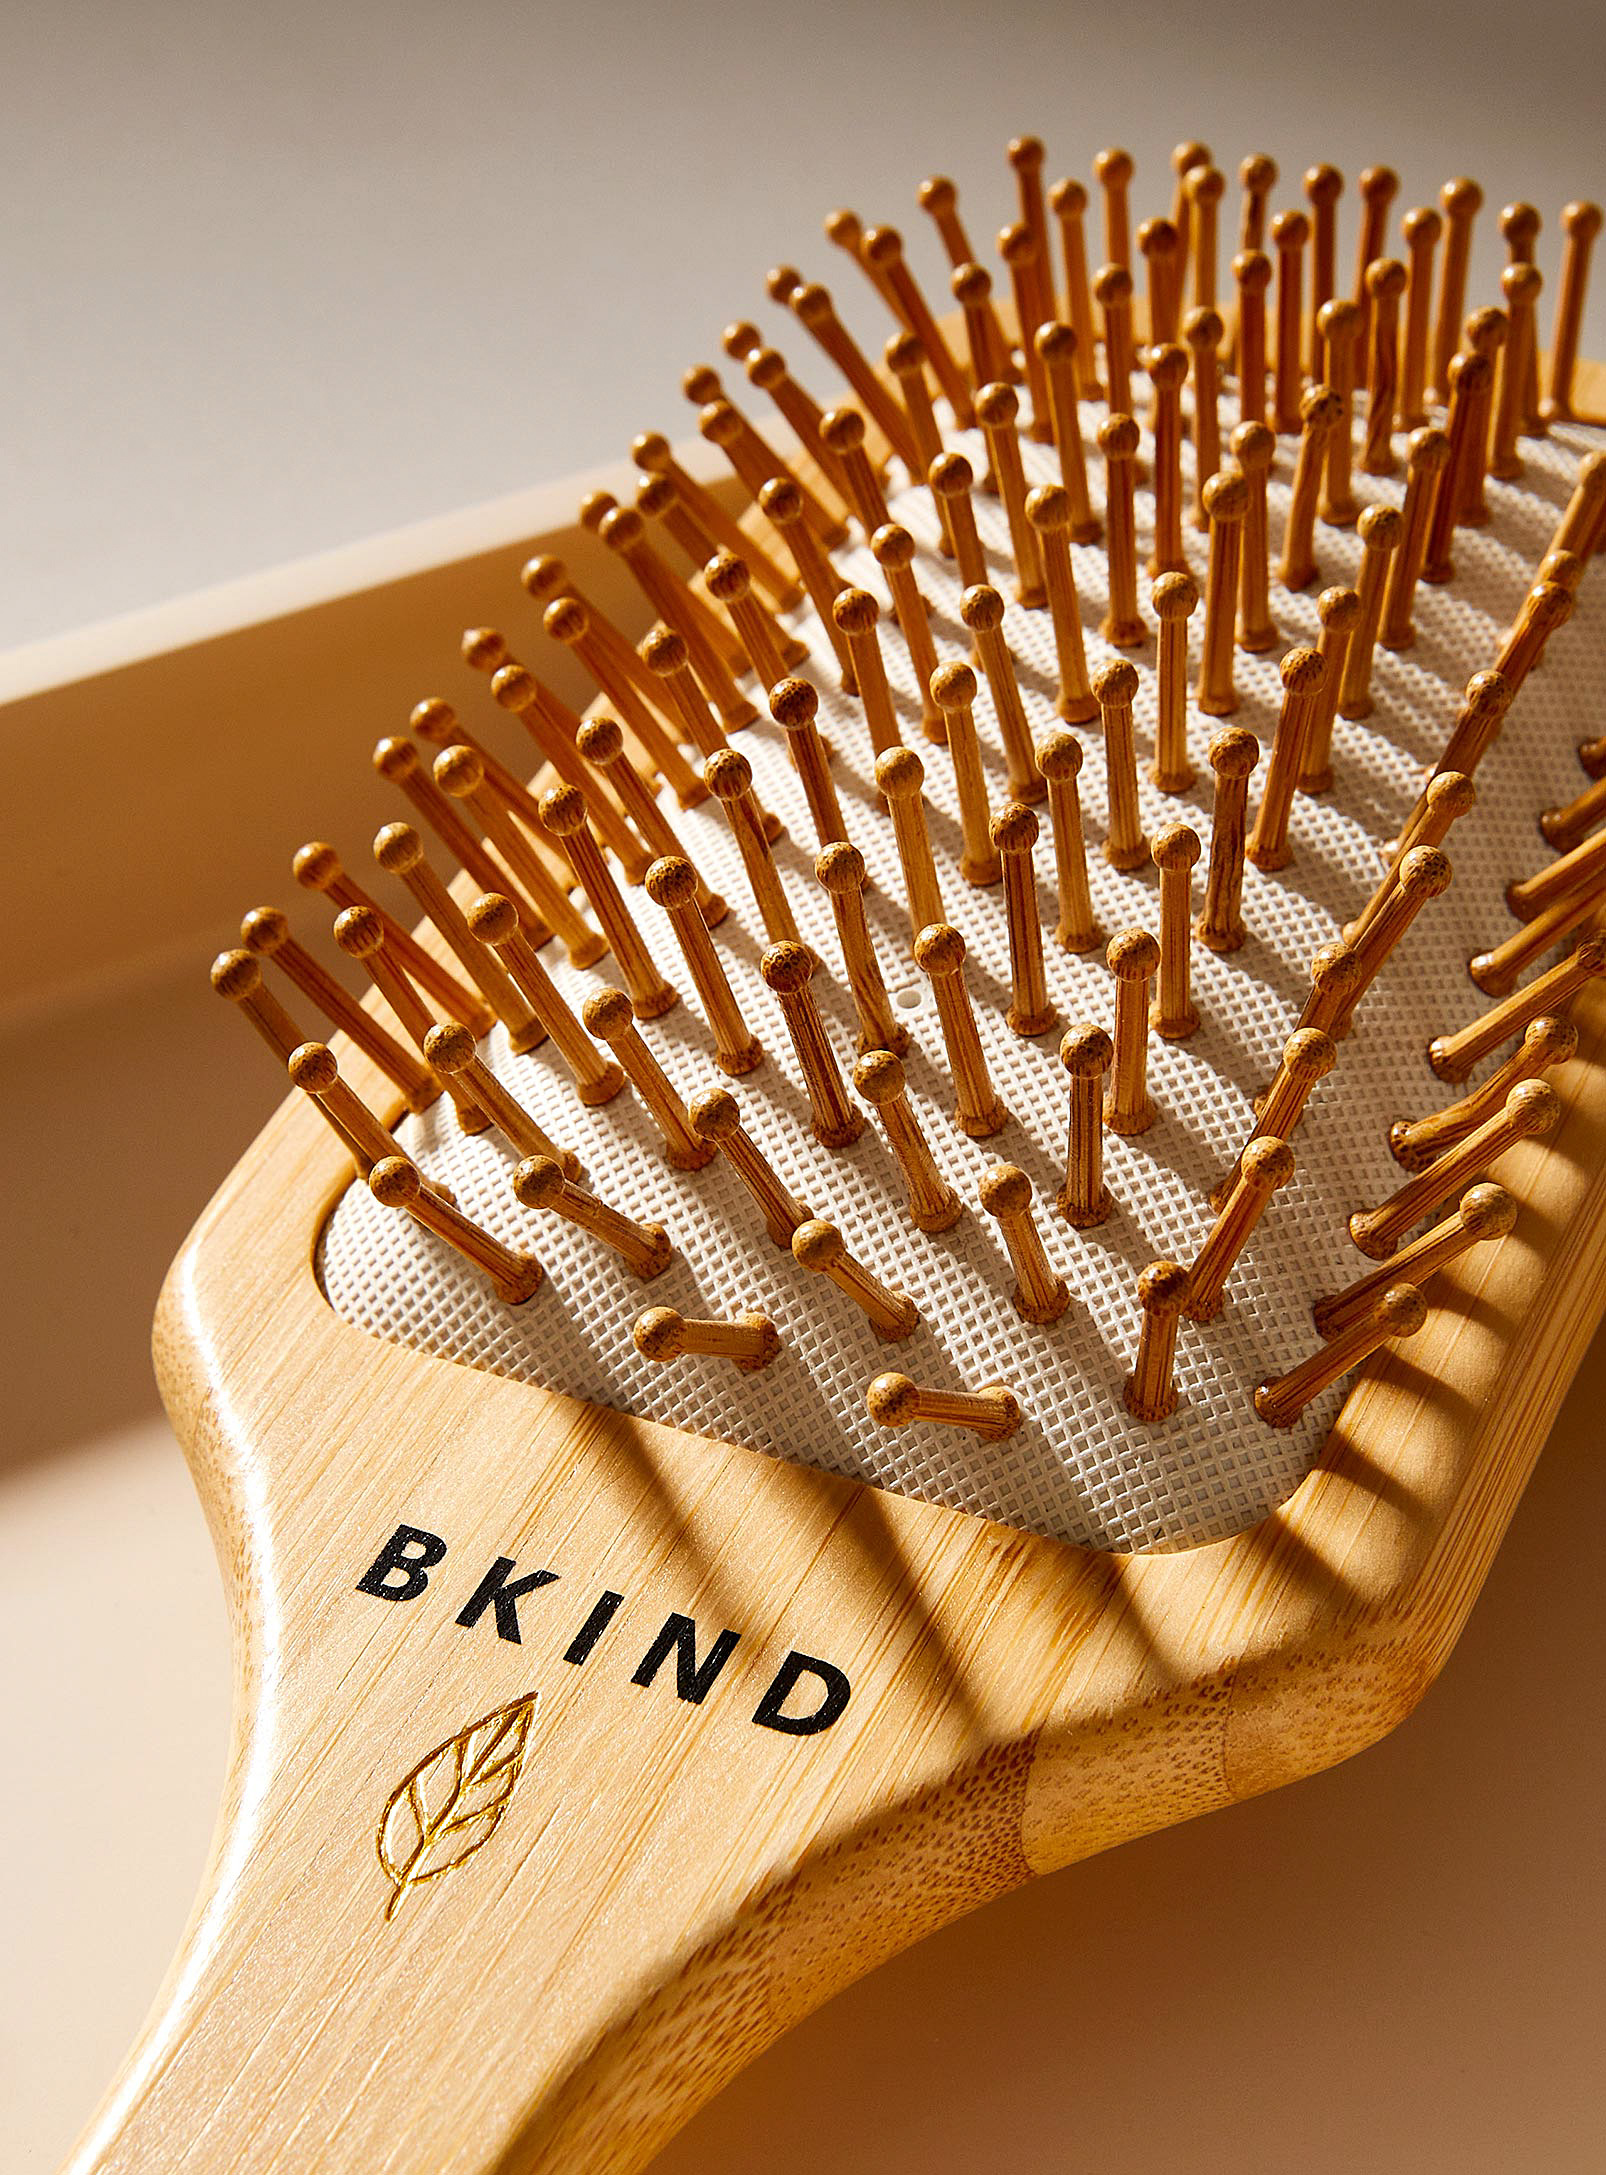 BKIND - Bamboo hairbrush